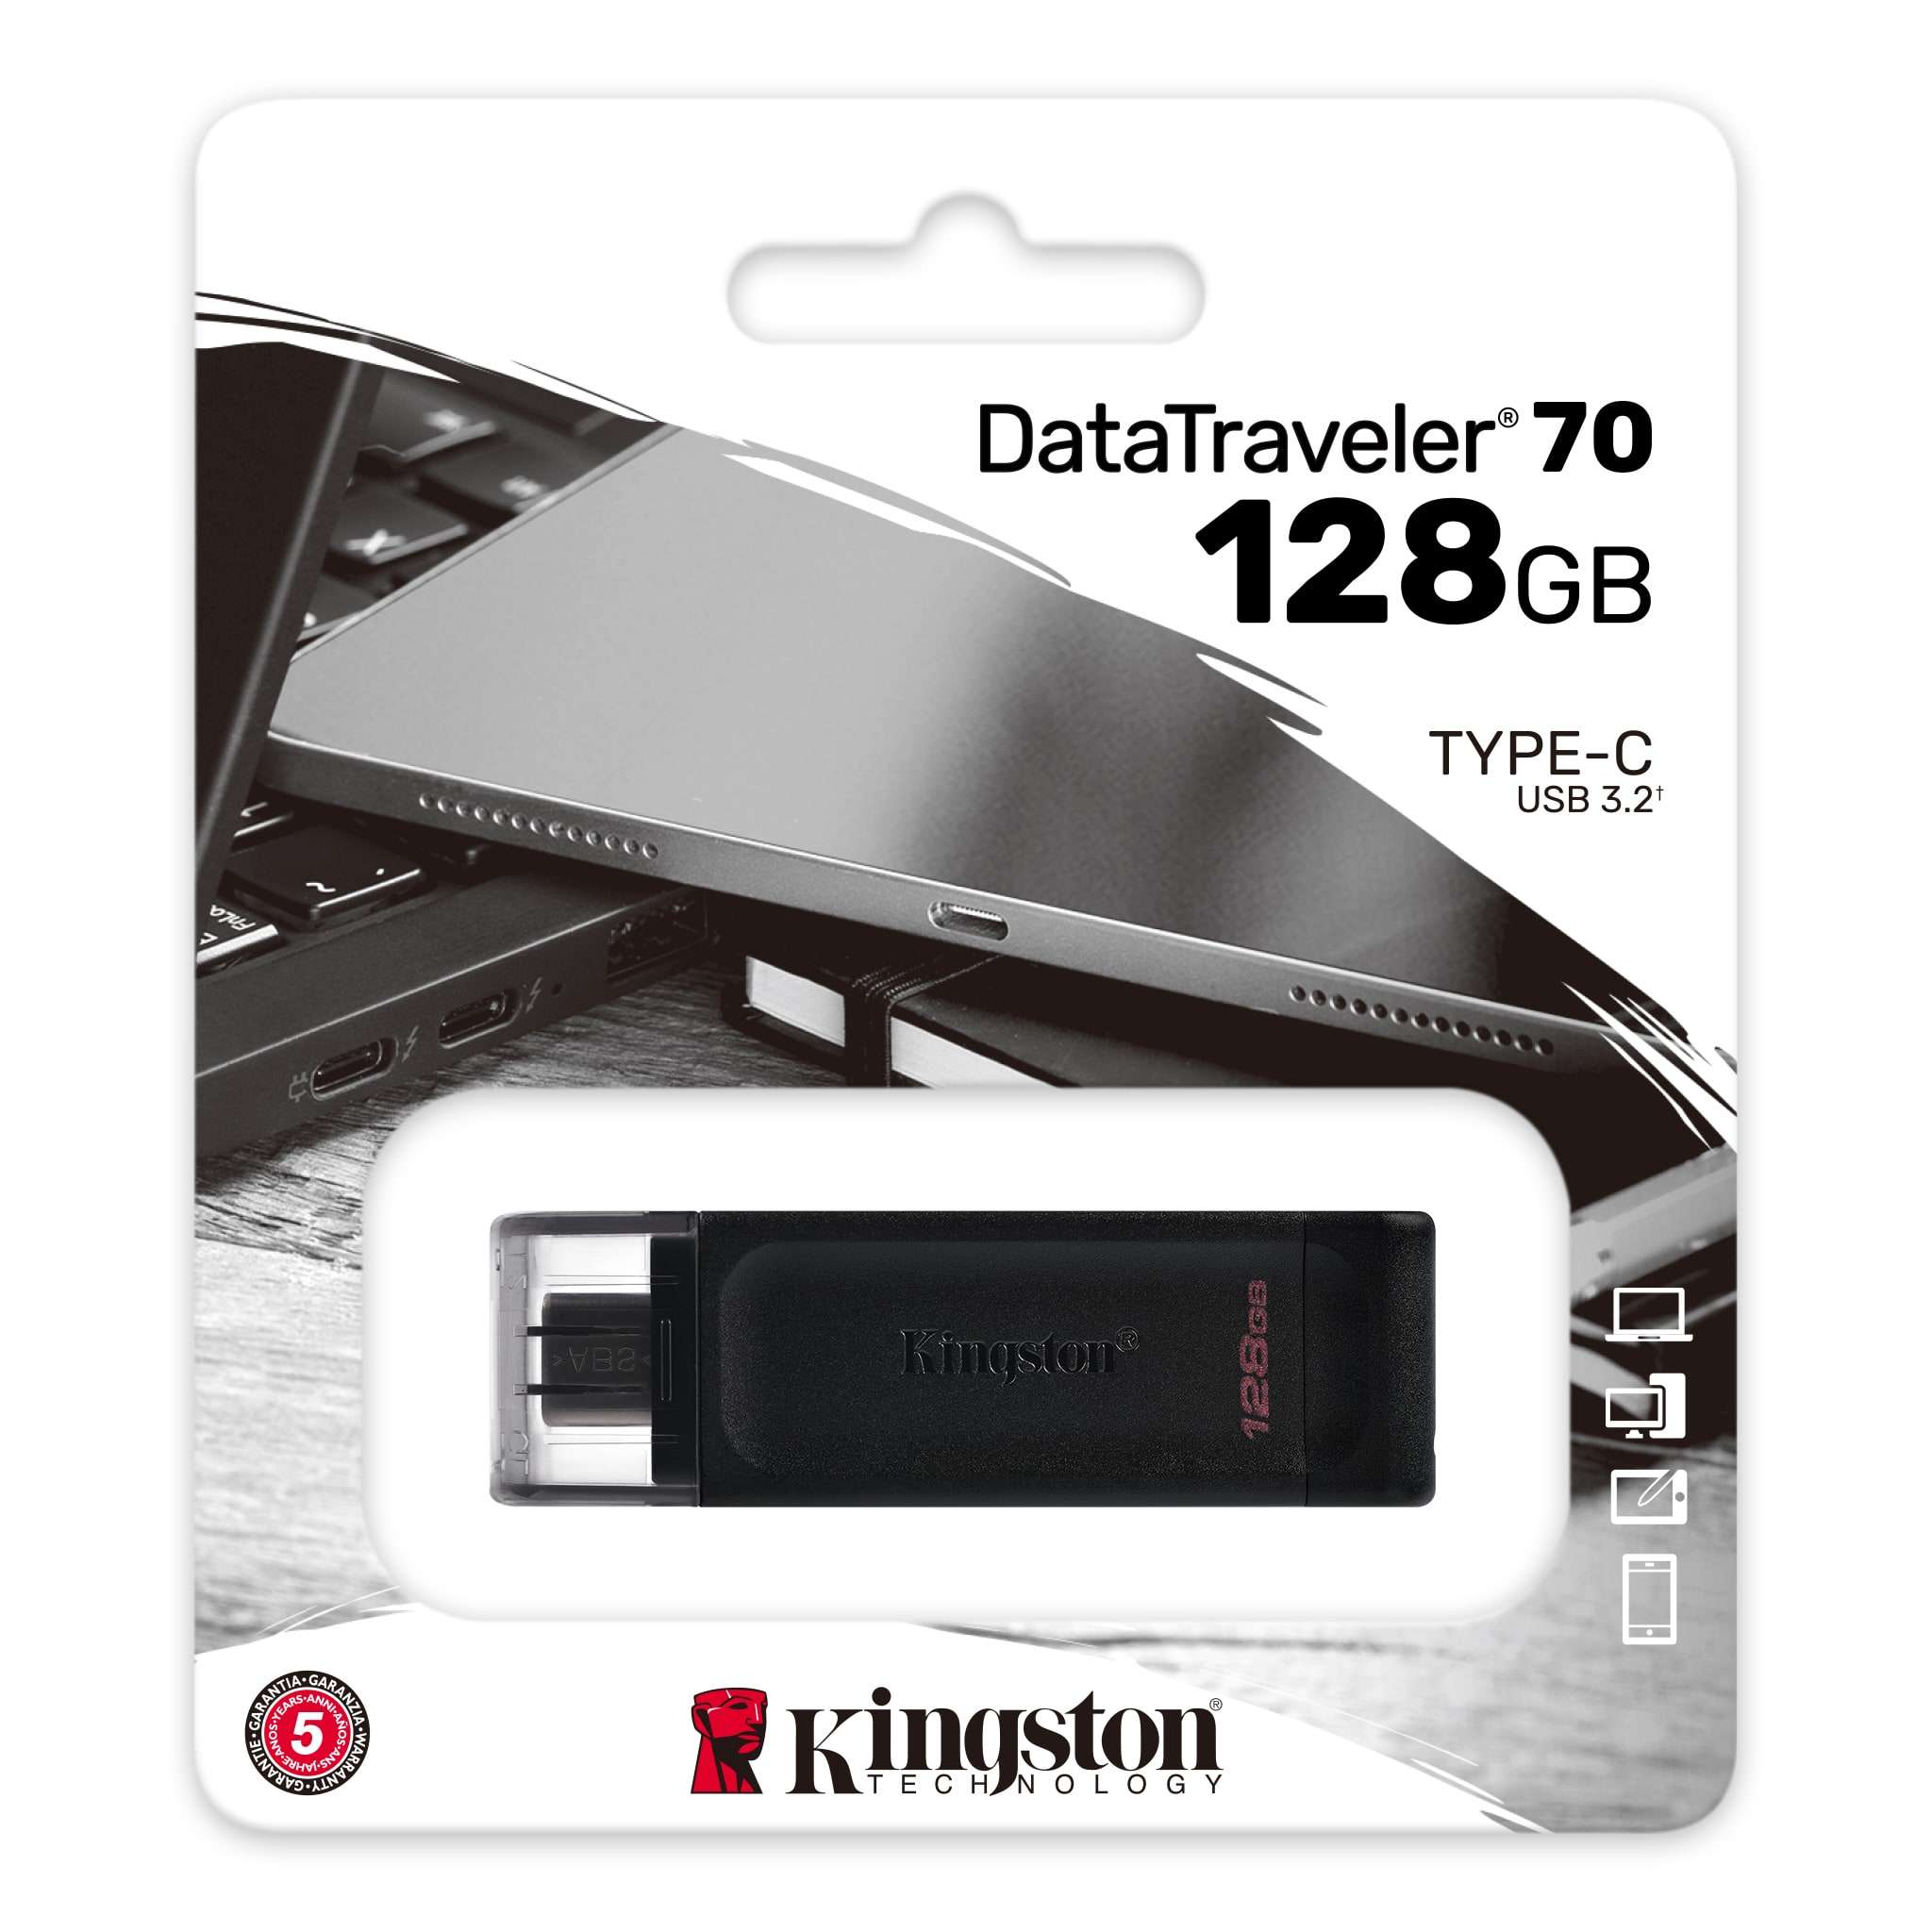 CH132KNG13 – DT70-128GB – KINGSTON DATATRAVELER 70.03